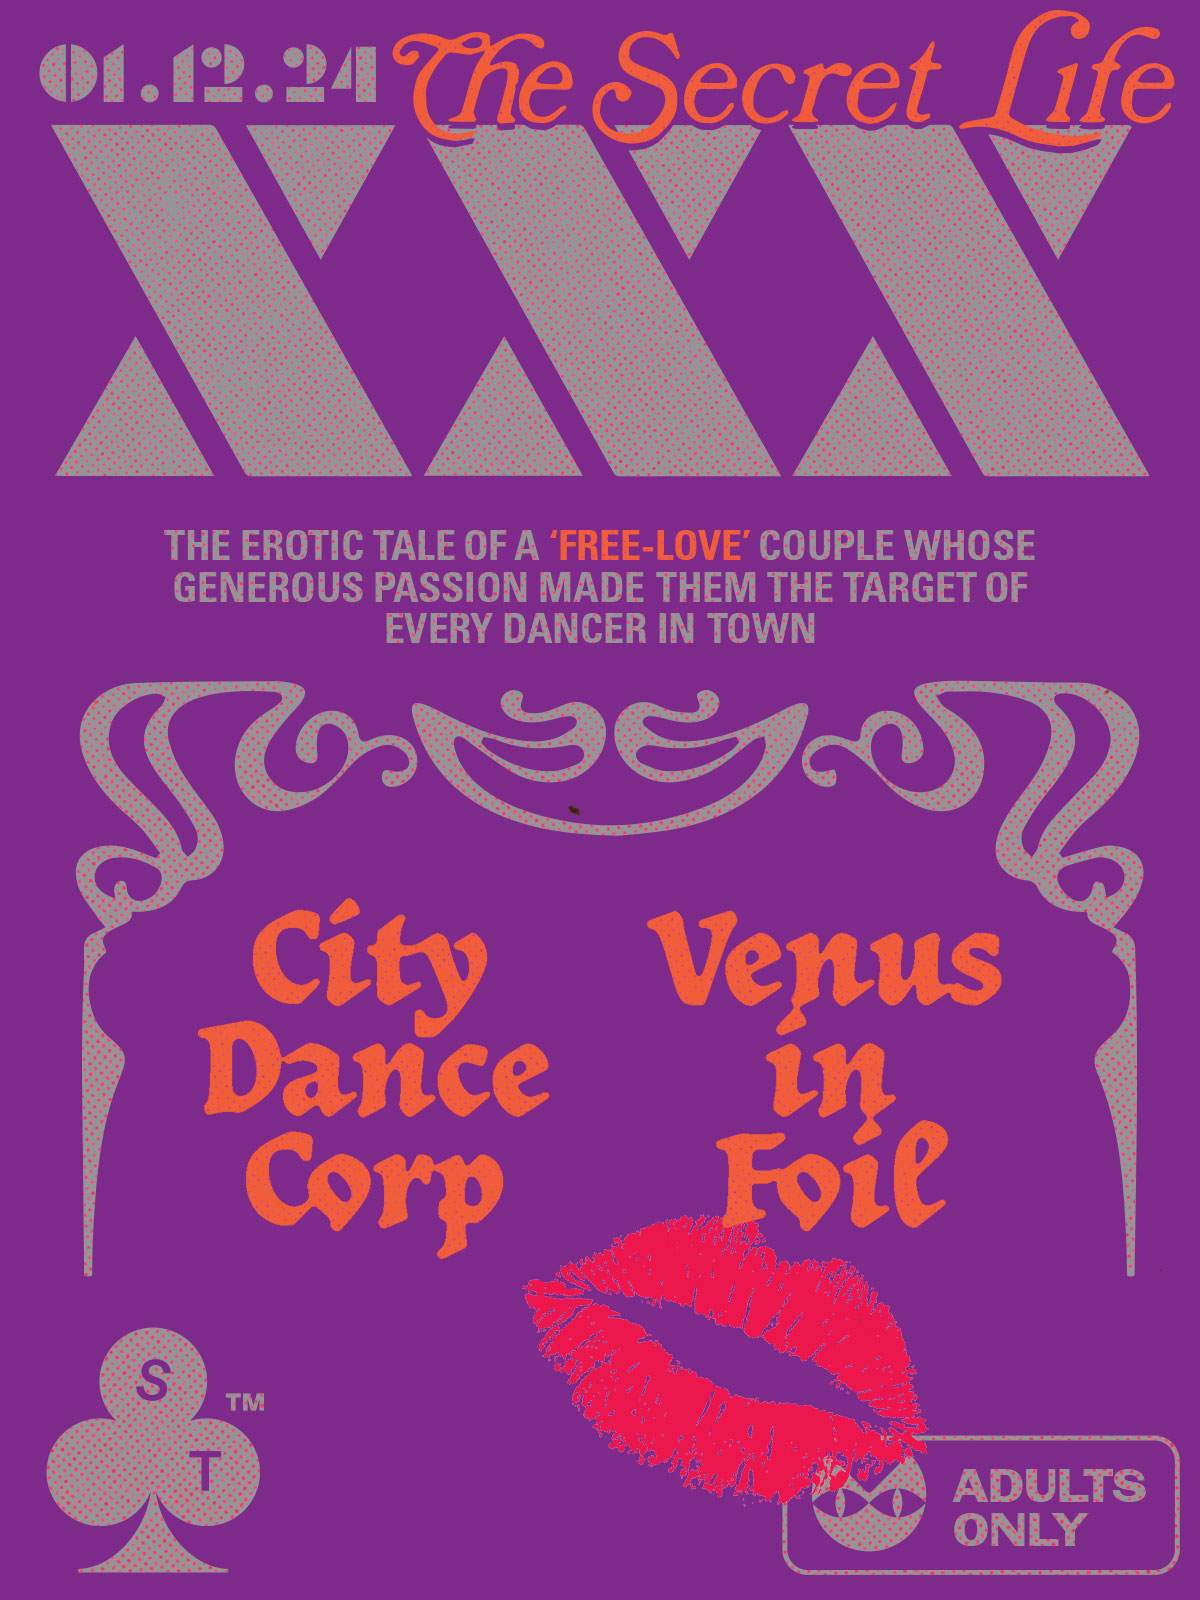 082: Club XXX - Venus in Foil and City Dance Corporation b2b all night long - Página frontal